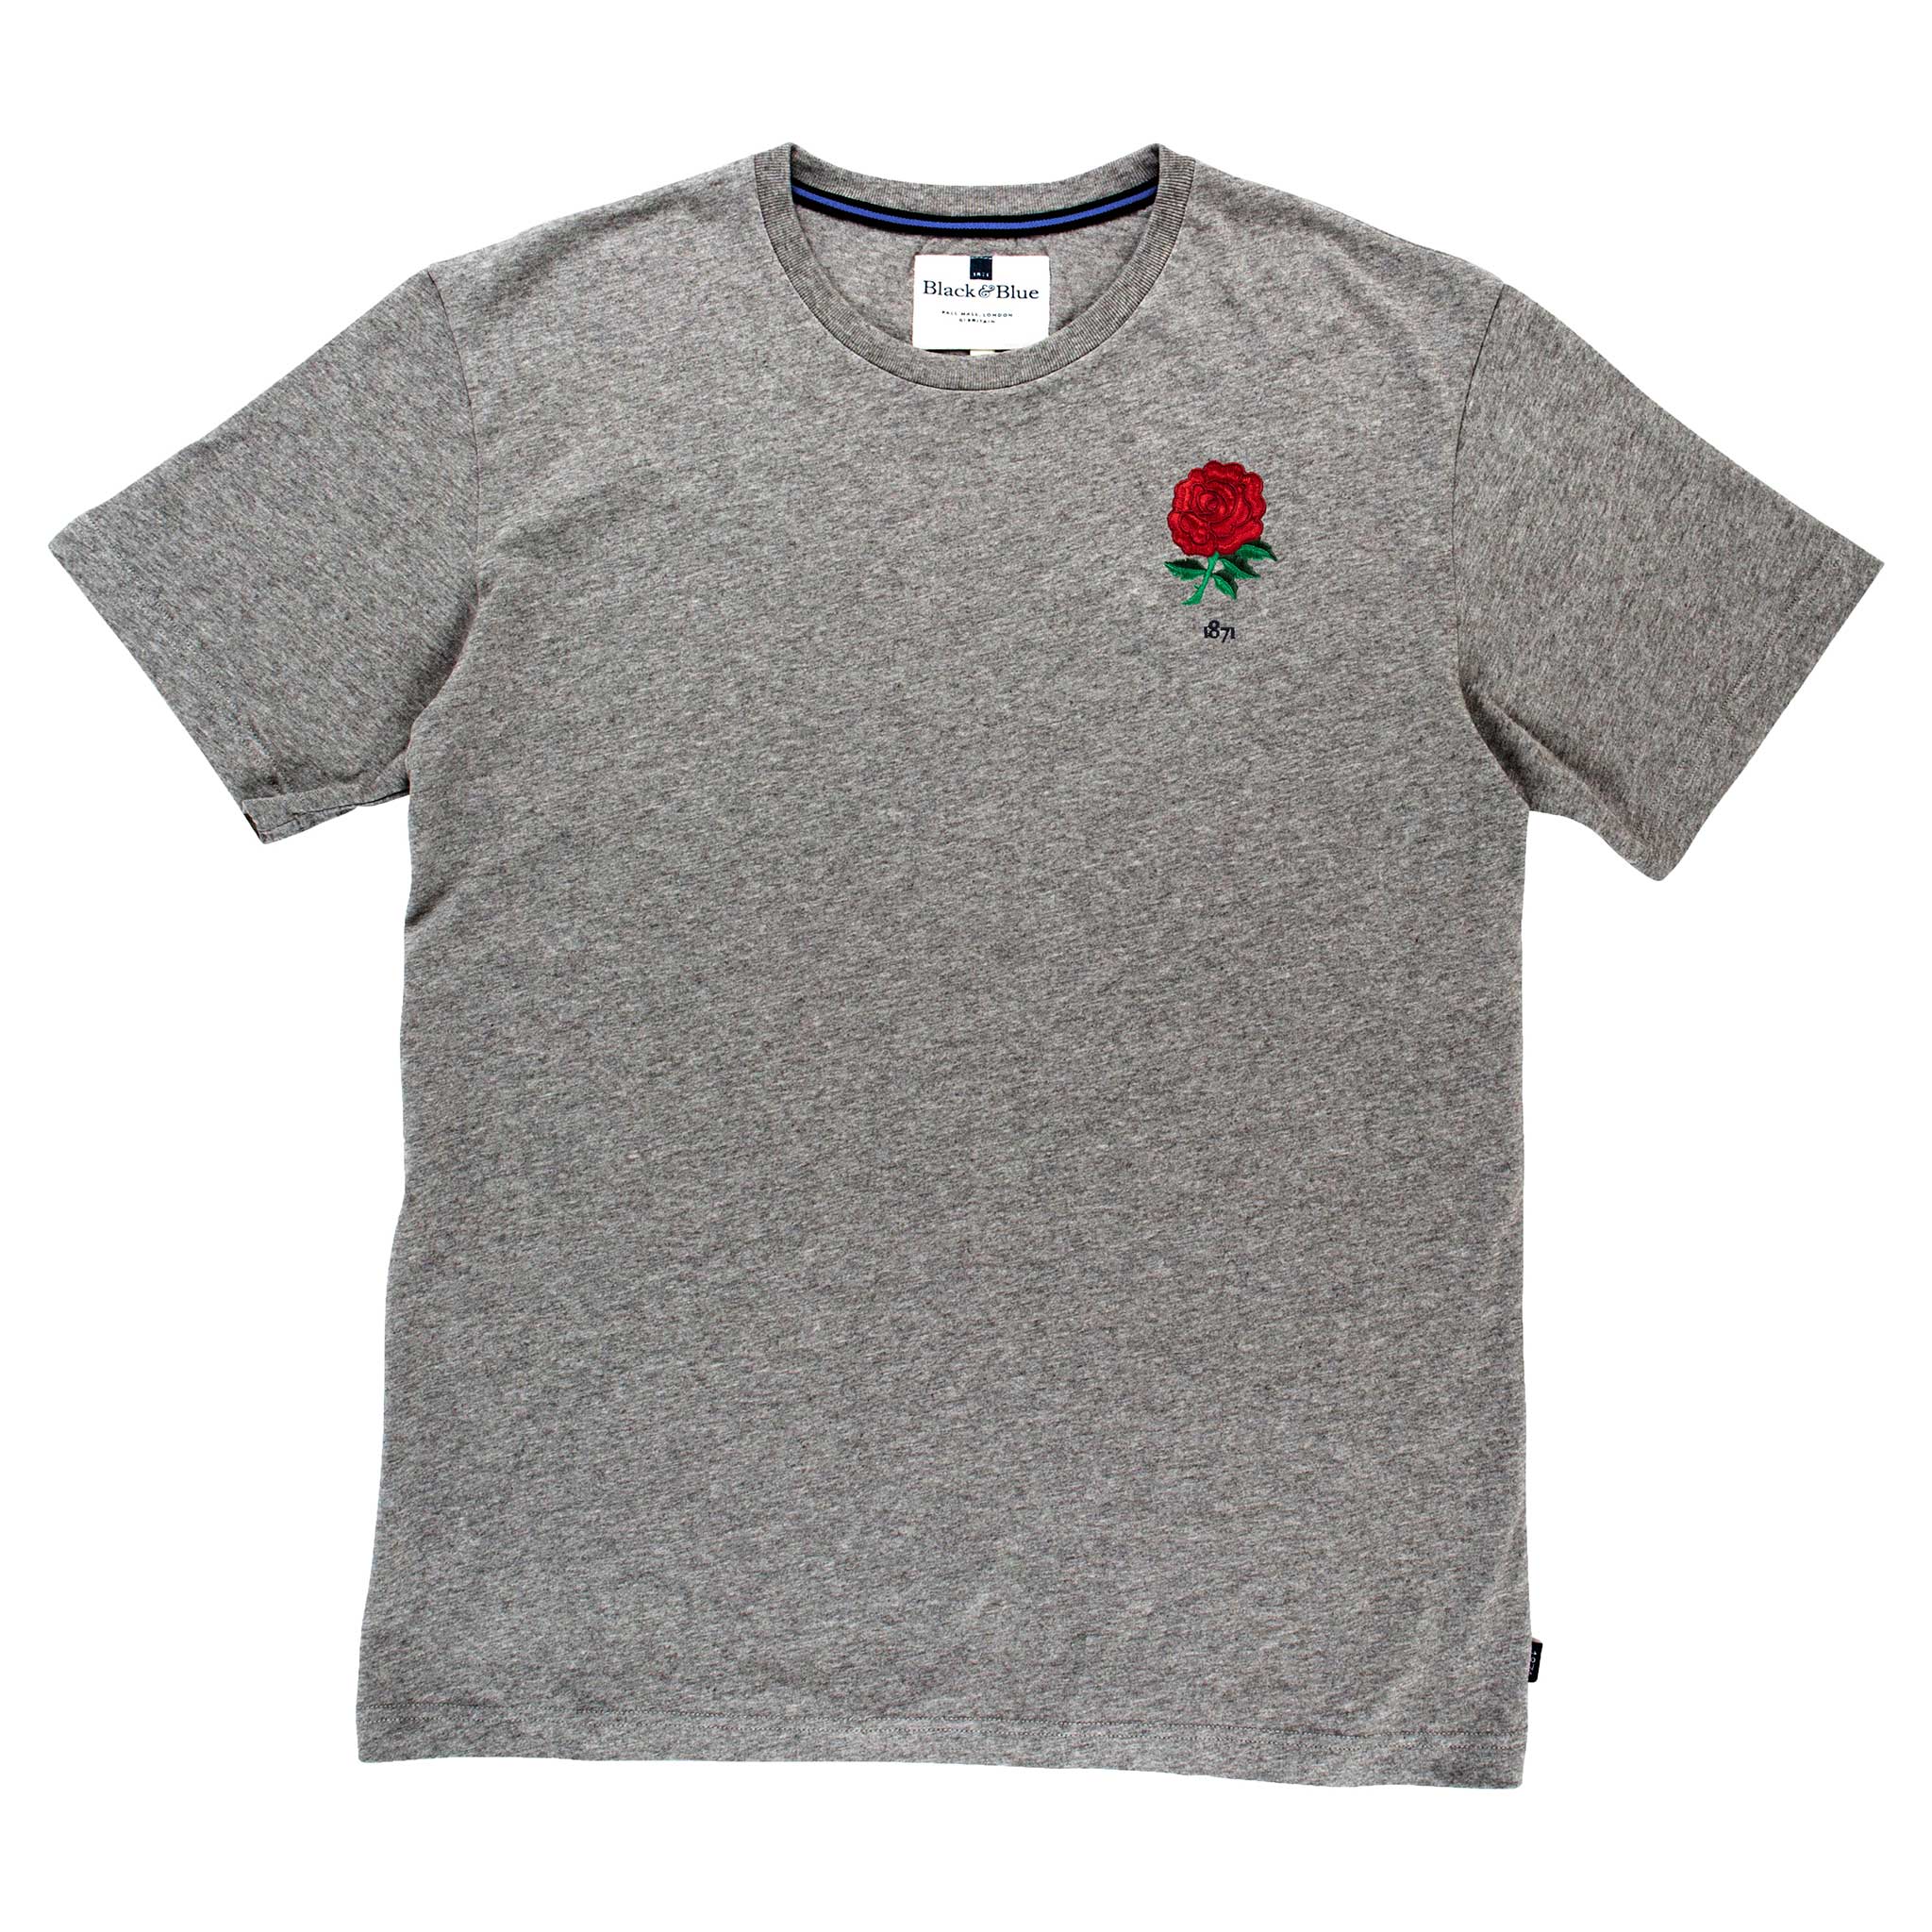 England 1871 Grey T-Shirt_Front